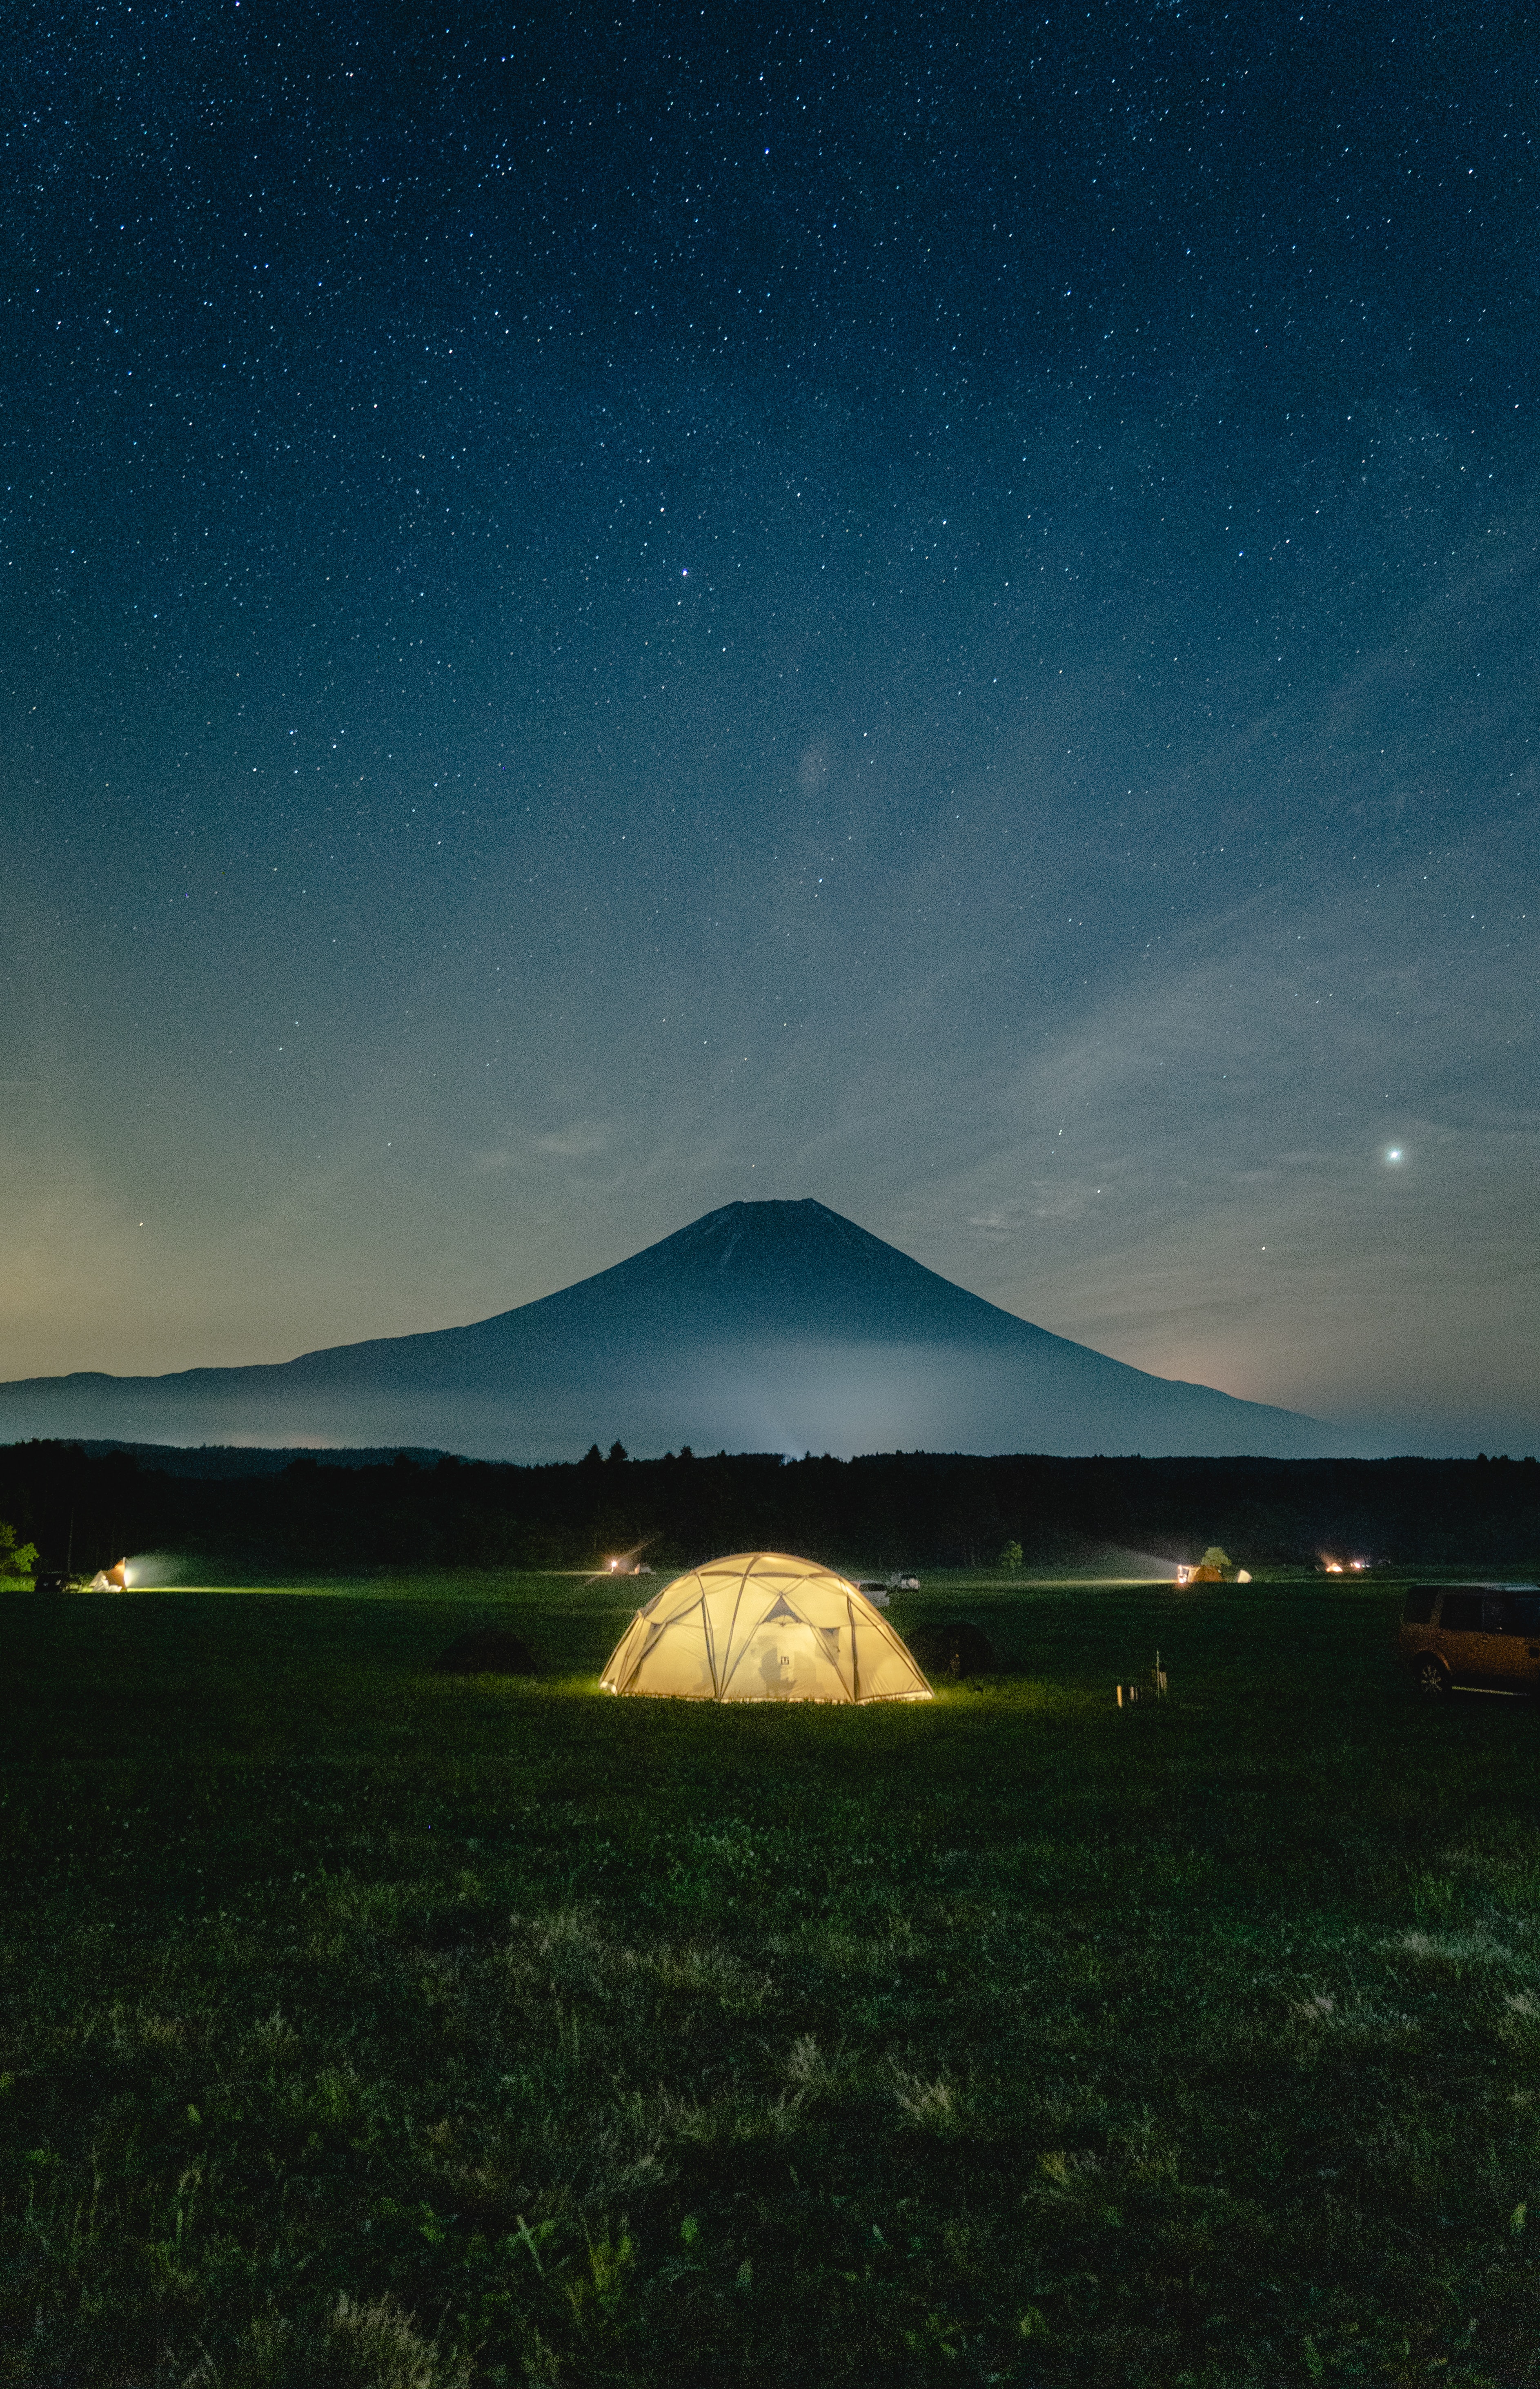 Free HD tent, camping, night, mountains, dark, glow, campsite